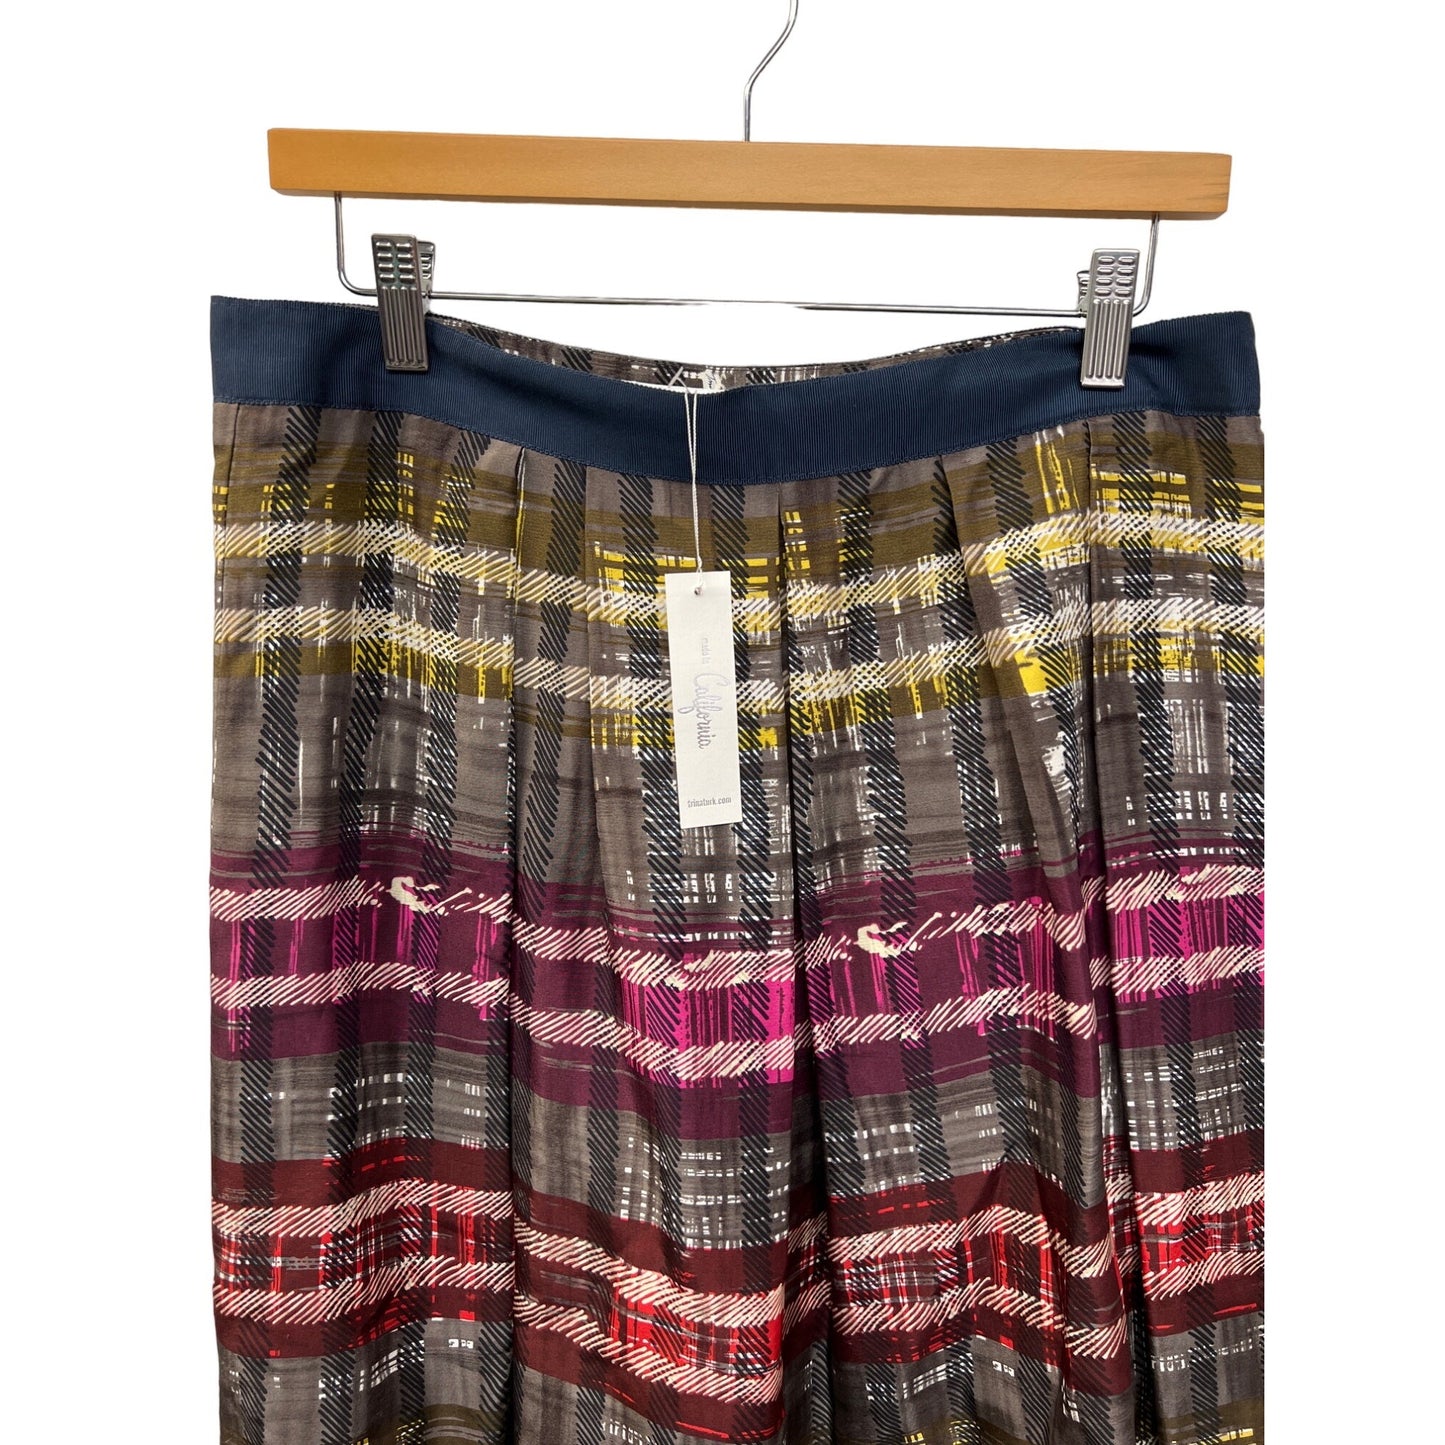 Trina Turk NWT Plaid Silk A-Line Skirt with Ribbon Waist